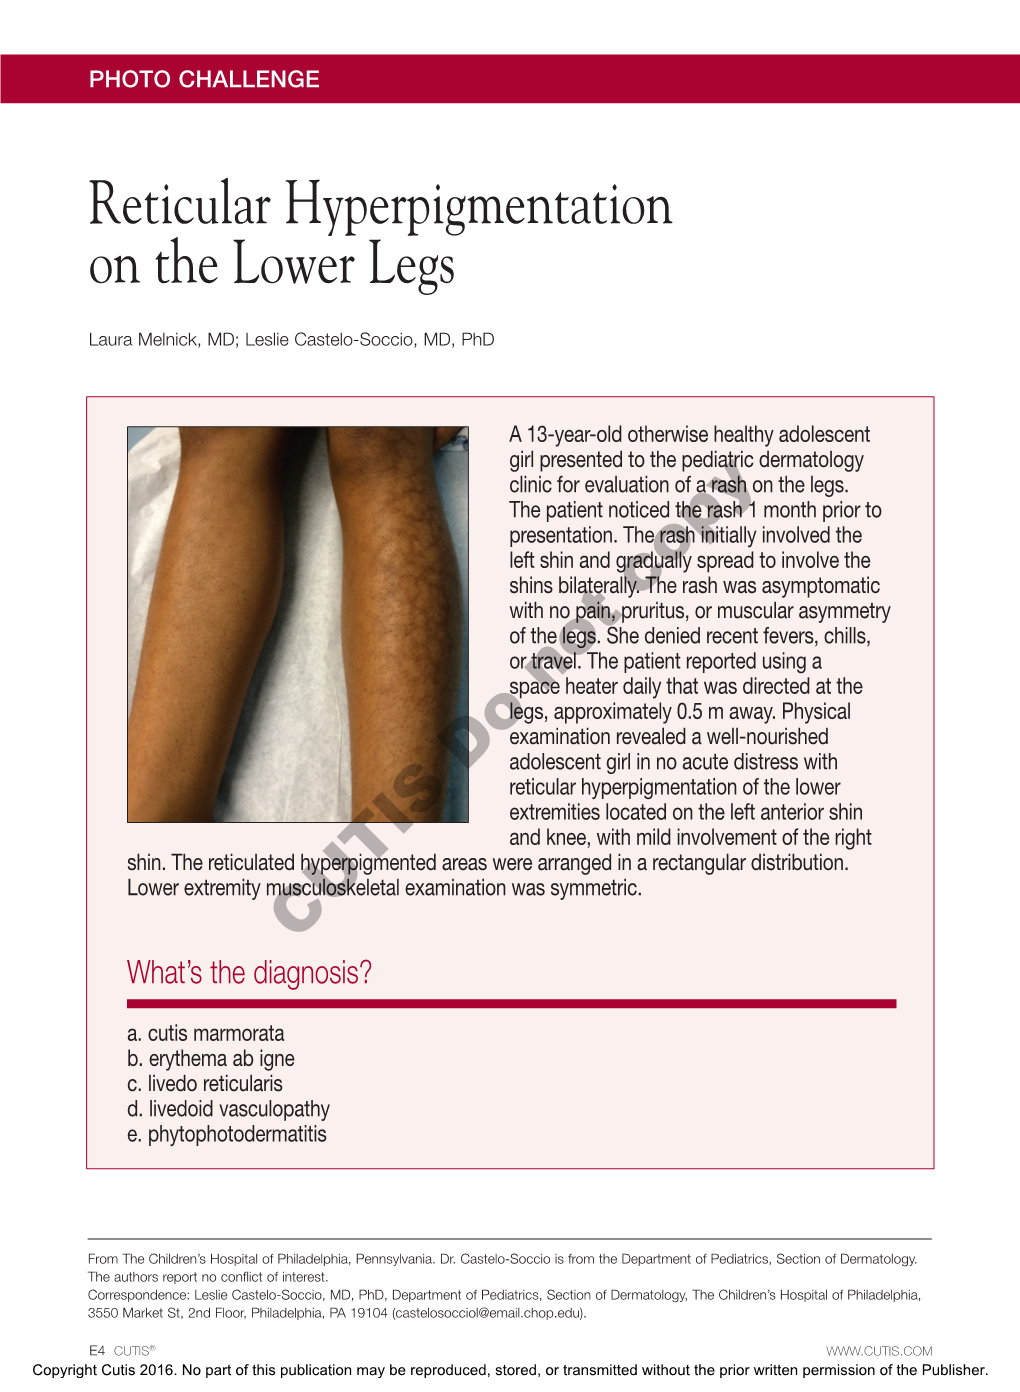 Reticular Hyperpigmentation on the Lower Legs